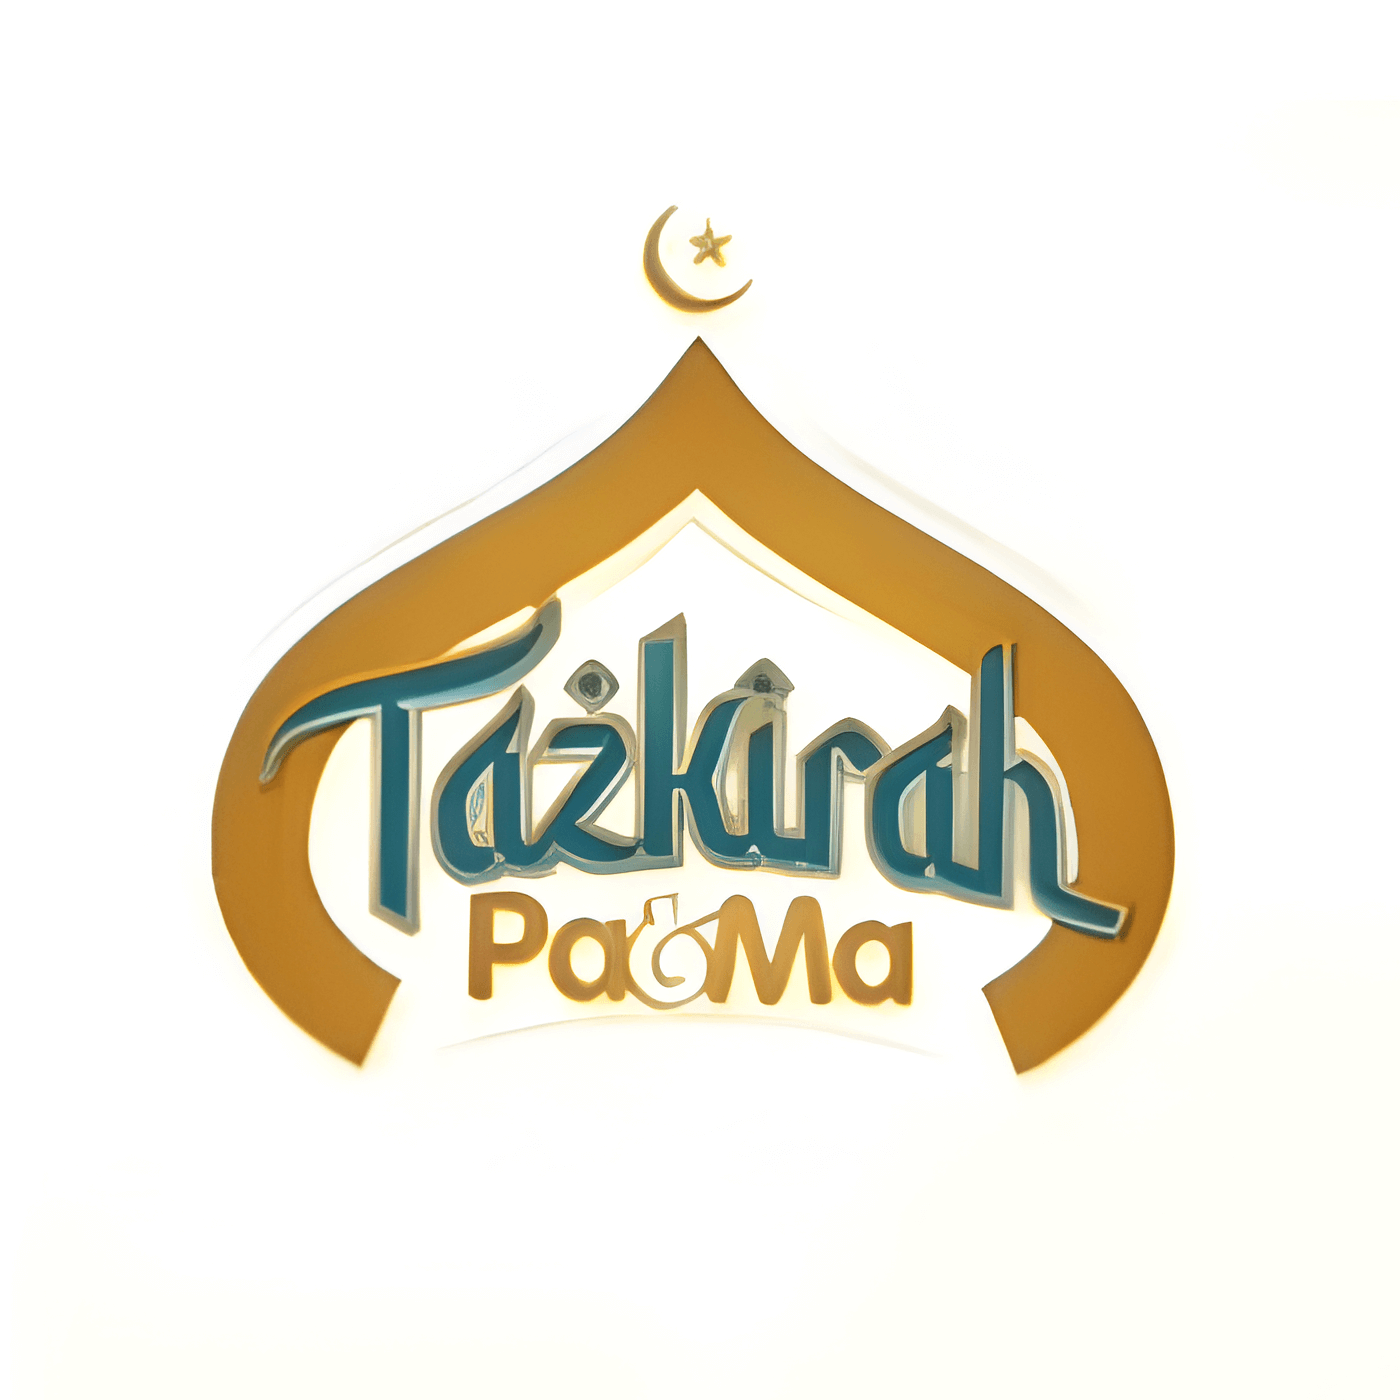 Tazkirah Pa&Ma - SEENI Podcast [BM]